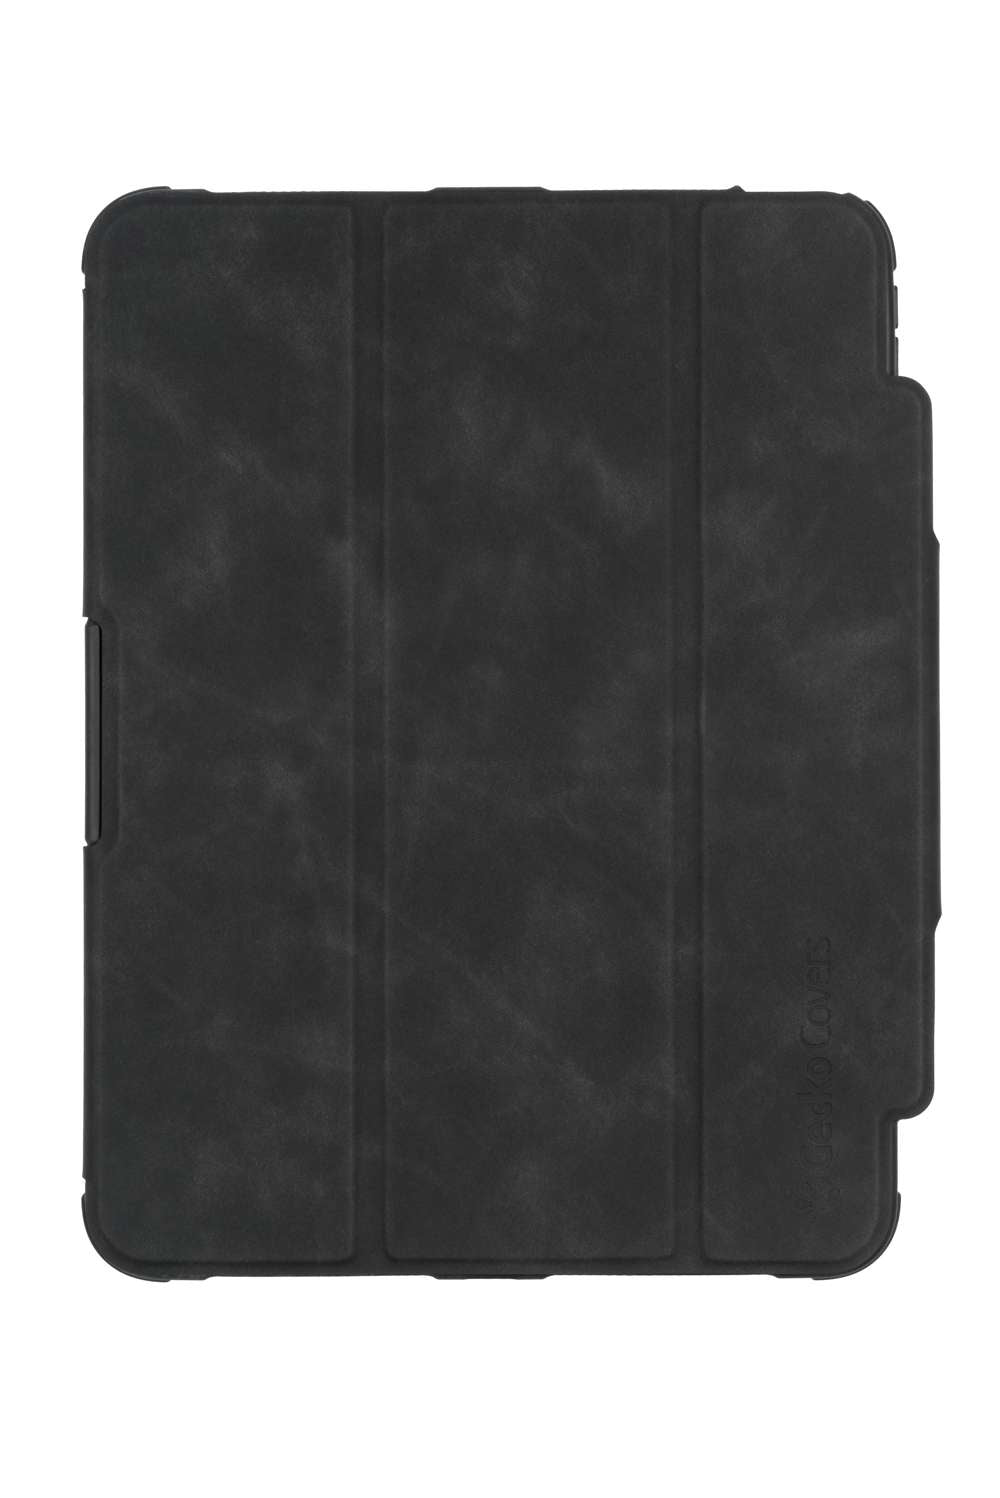 V10T91C1 - Rugged Tablet case - Apple iPad Pro 11 inch (2021) - Black